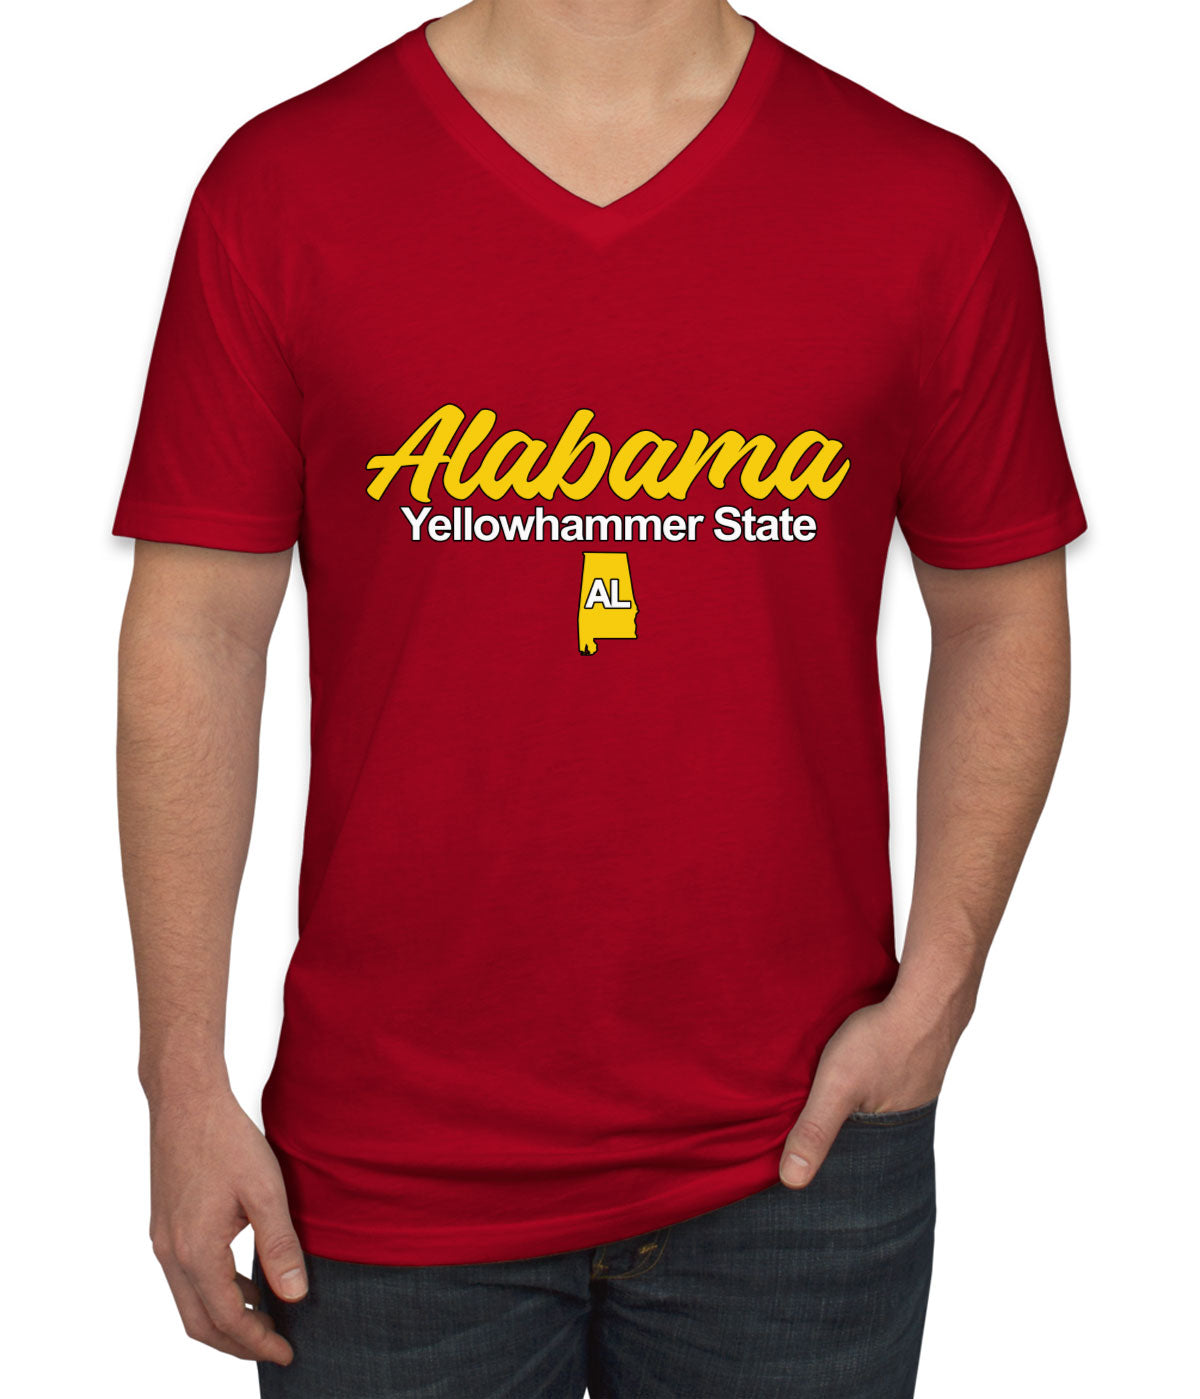 Alabama Yellowhammer State Men's V Neck T-shirt